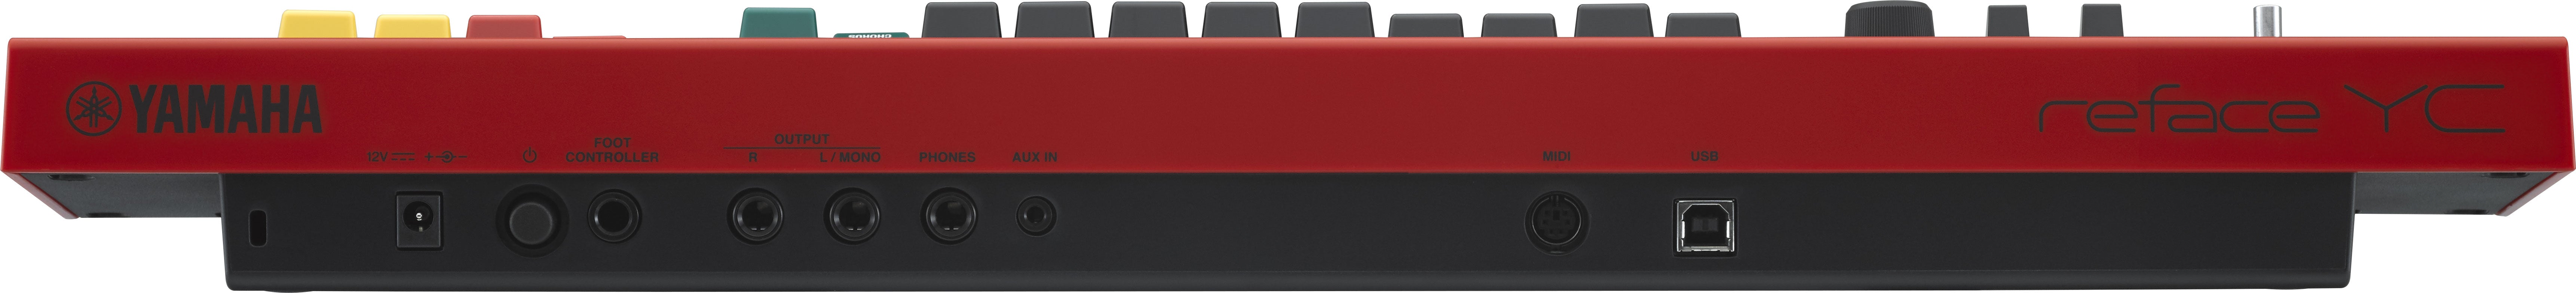 Yamaha Reface YC Portable Mini Synthesizer - Red